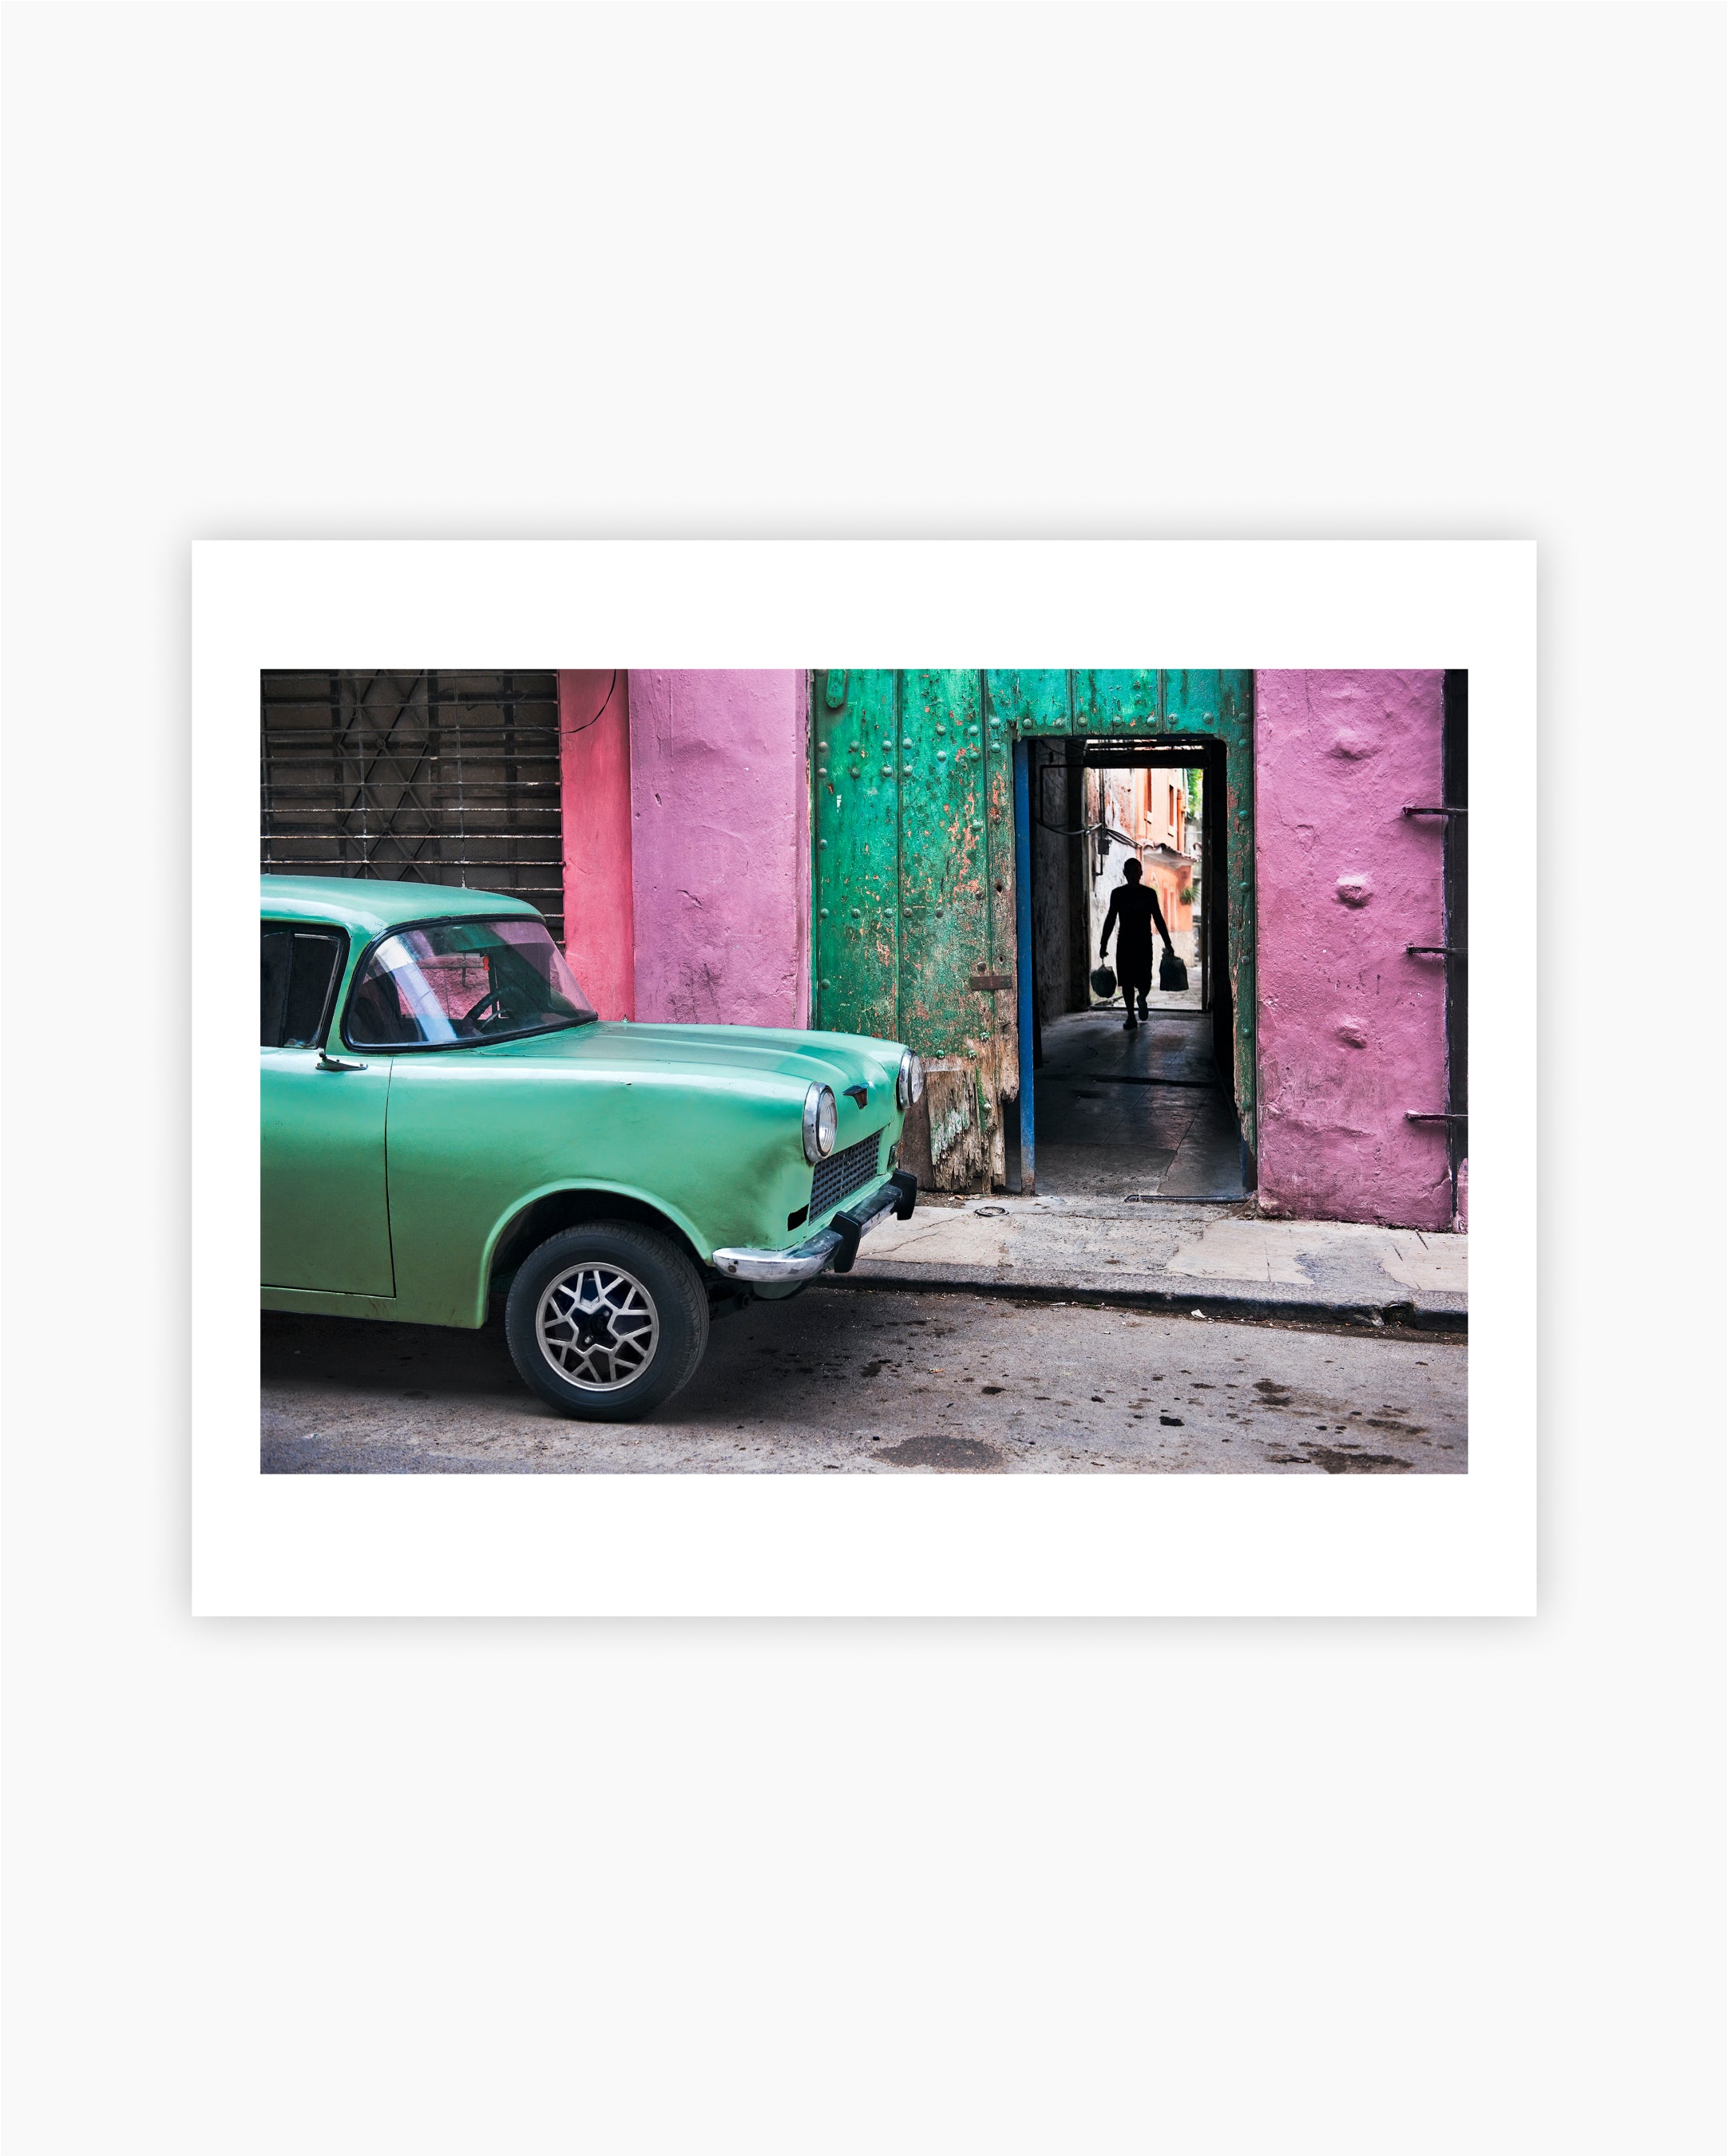 Magnum Editions: Downtown Havana. Cuba, 2010